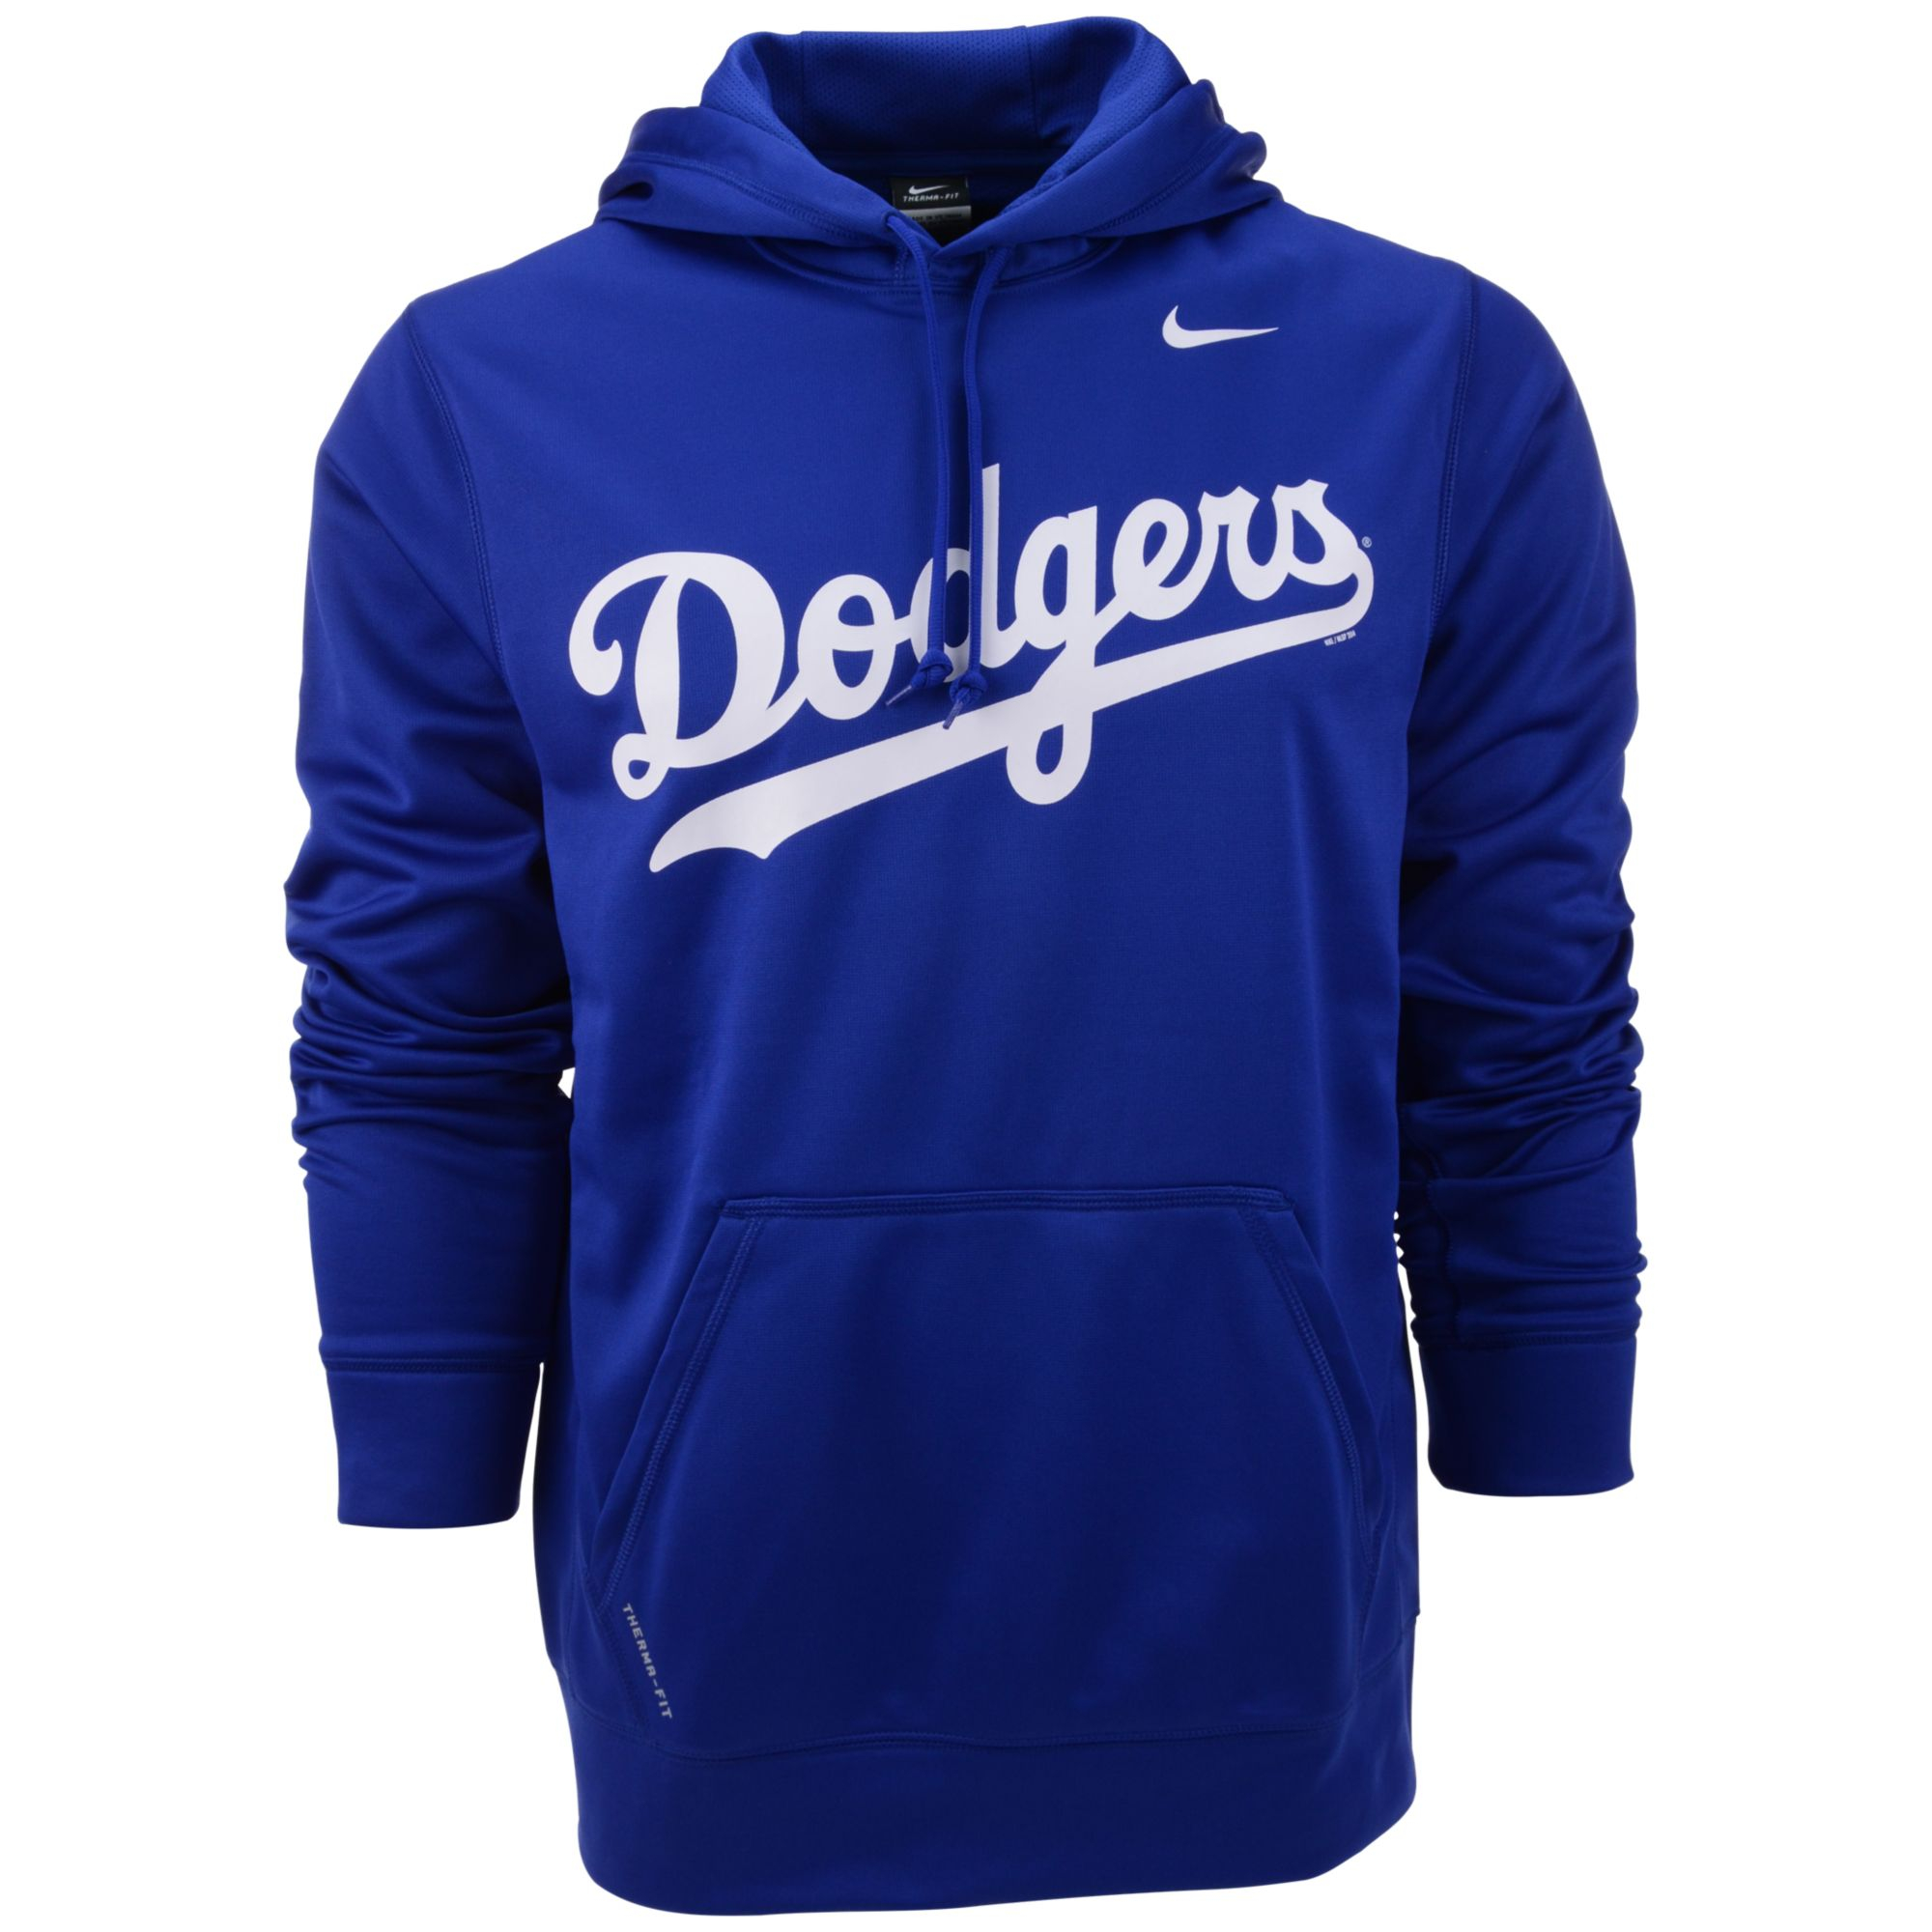 Lyst - Nike Los Angeles Dodgers Performance Hoodie in Blue for Men